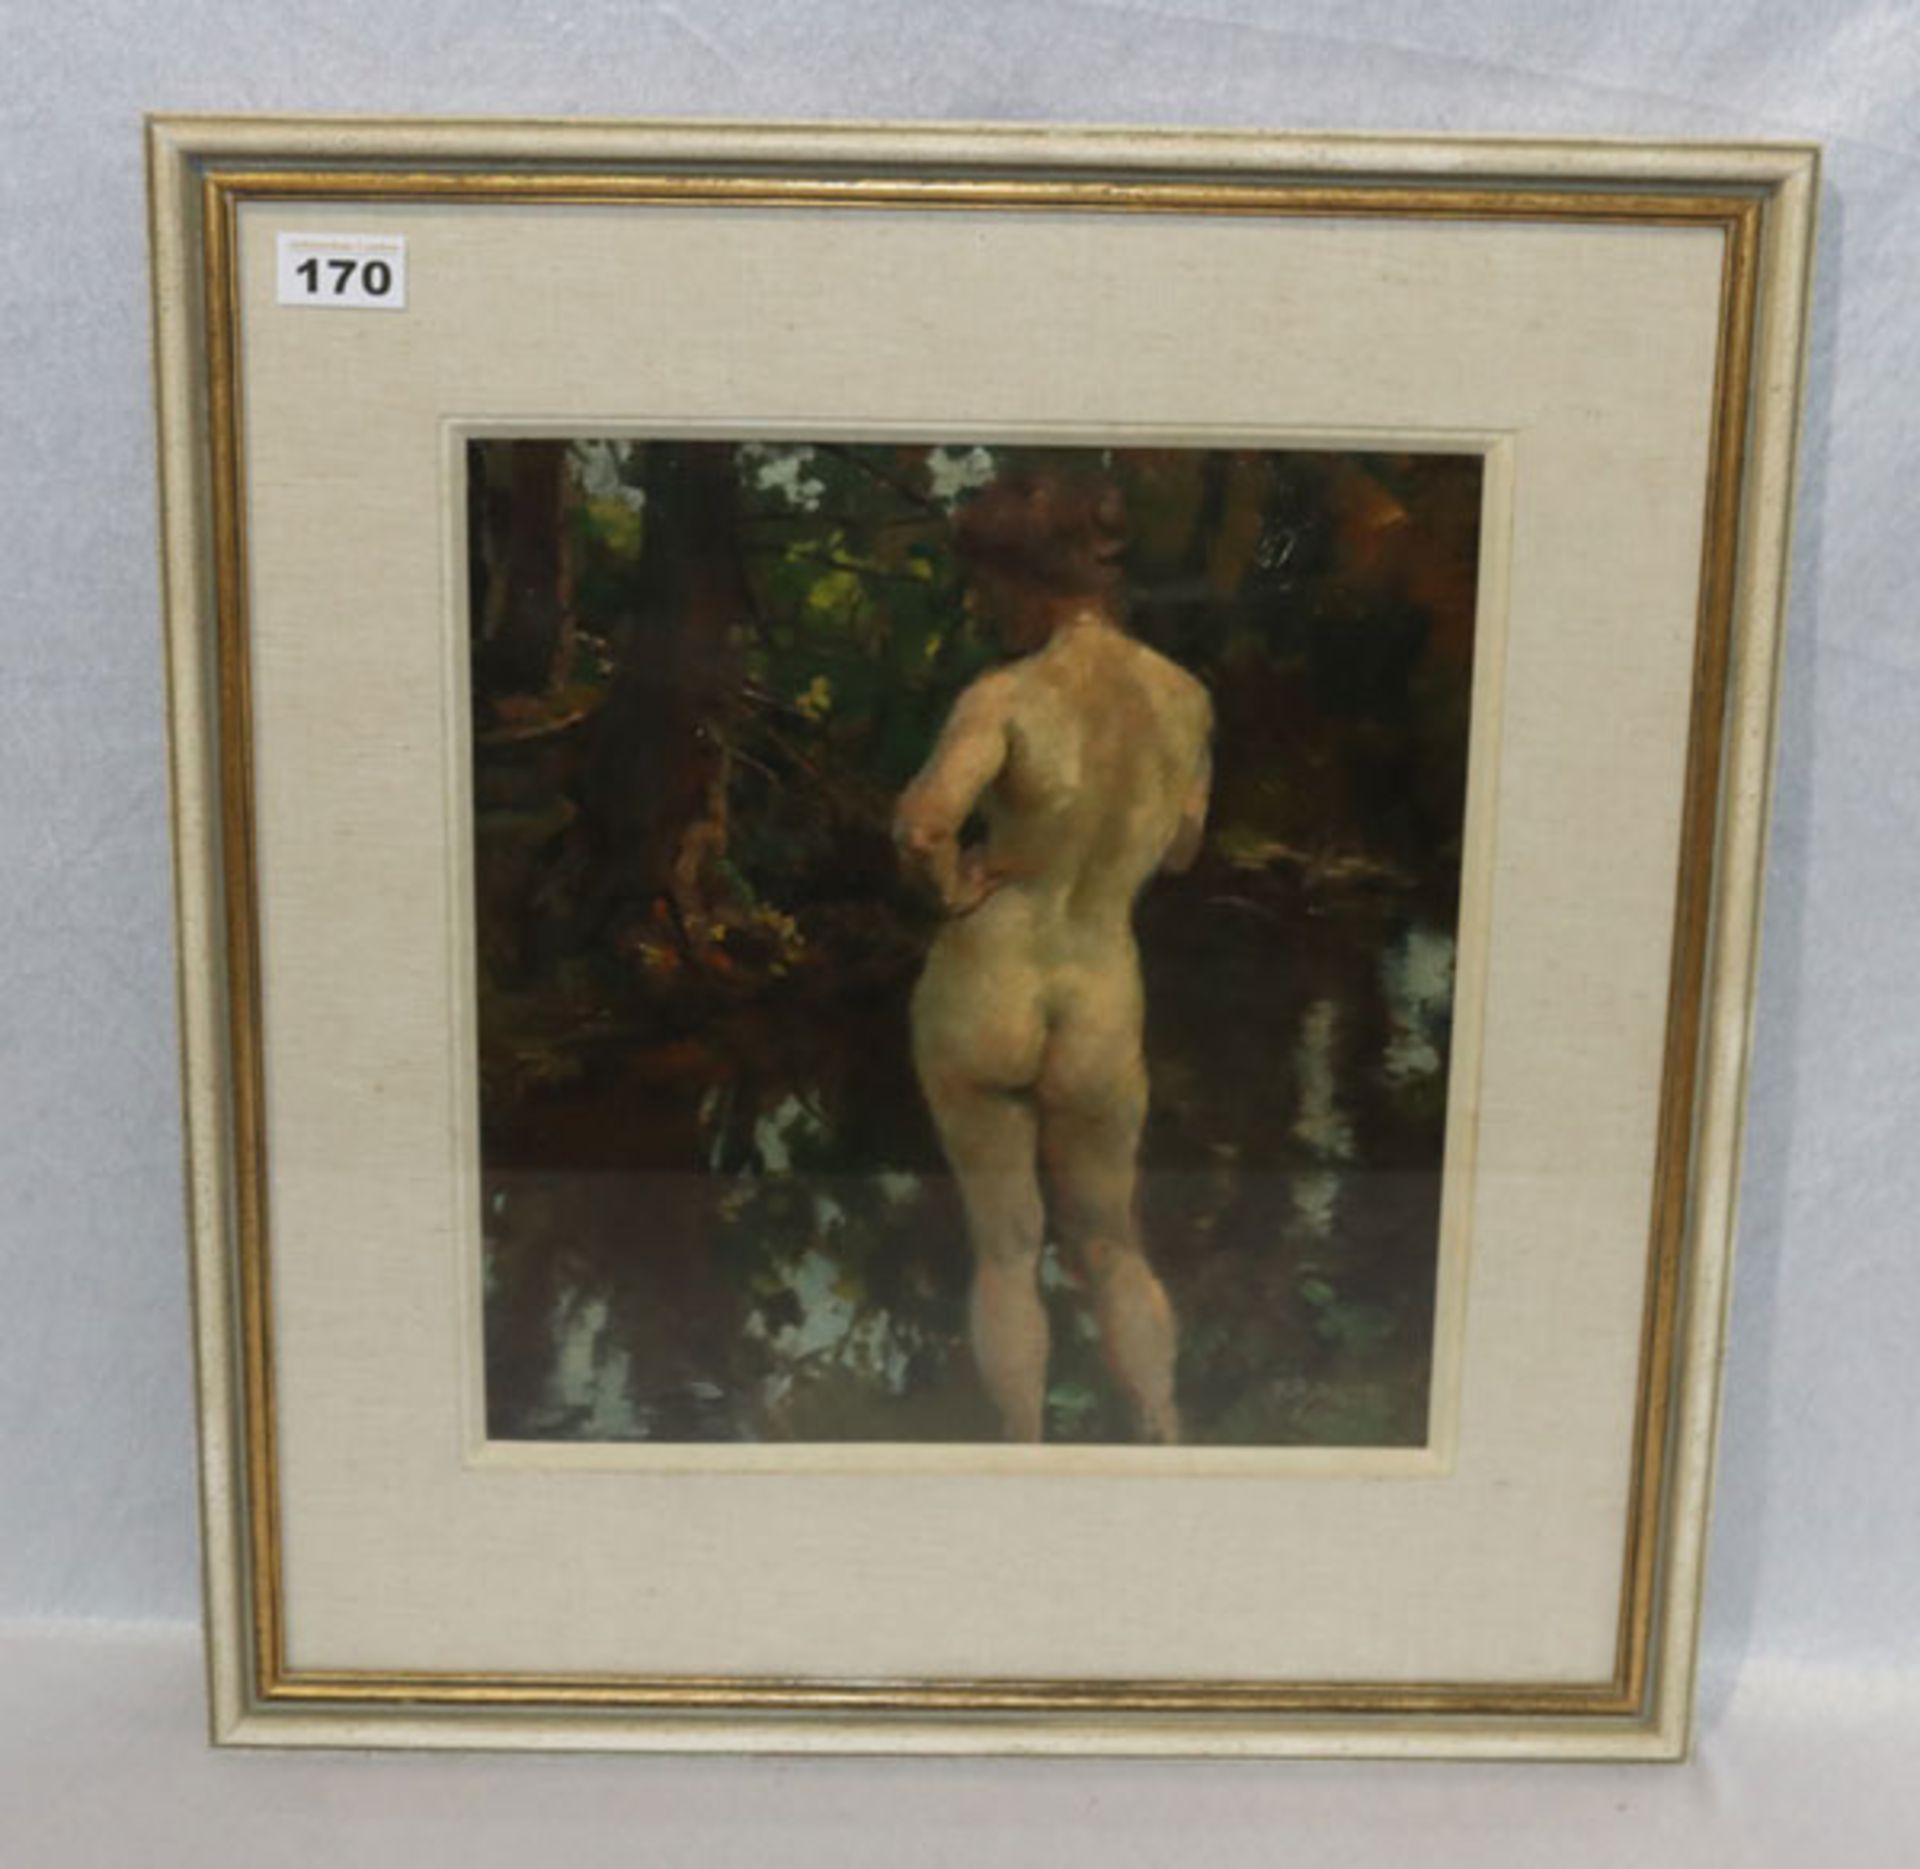 Gemälde ÖL/Malkarton 'Rückseitiger Fraunenakt', signiert P. Paede, Paul Paede, * 1868 Berlin +